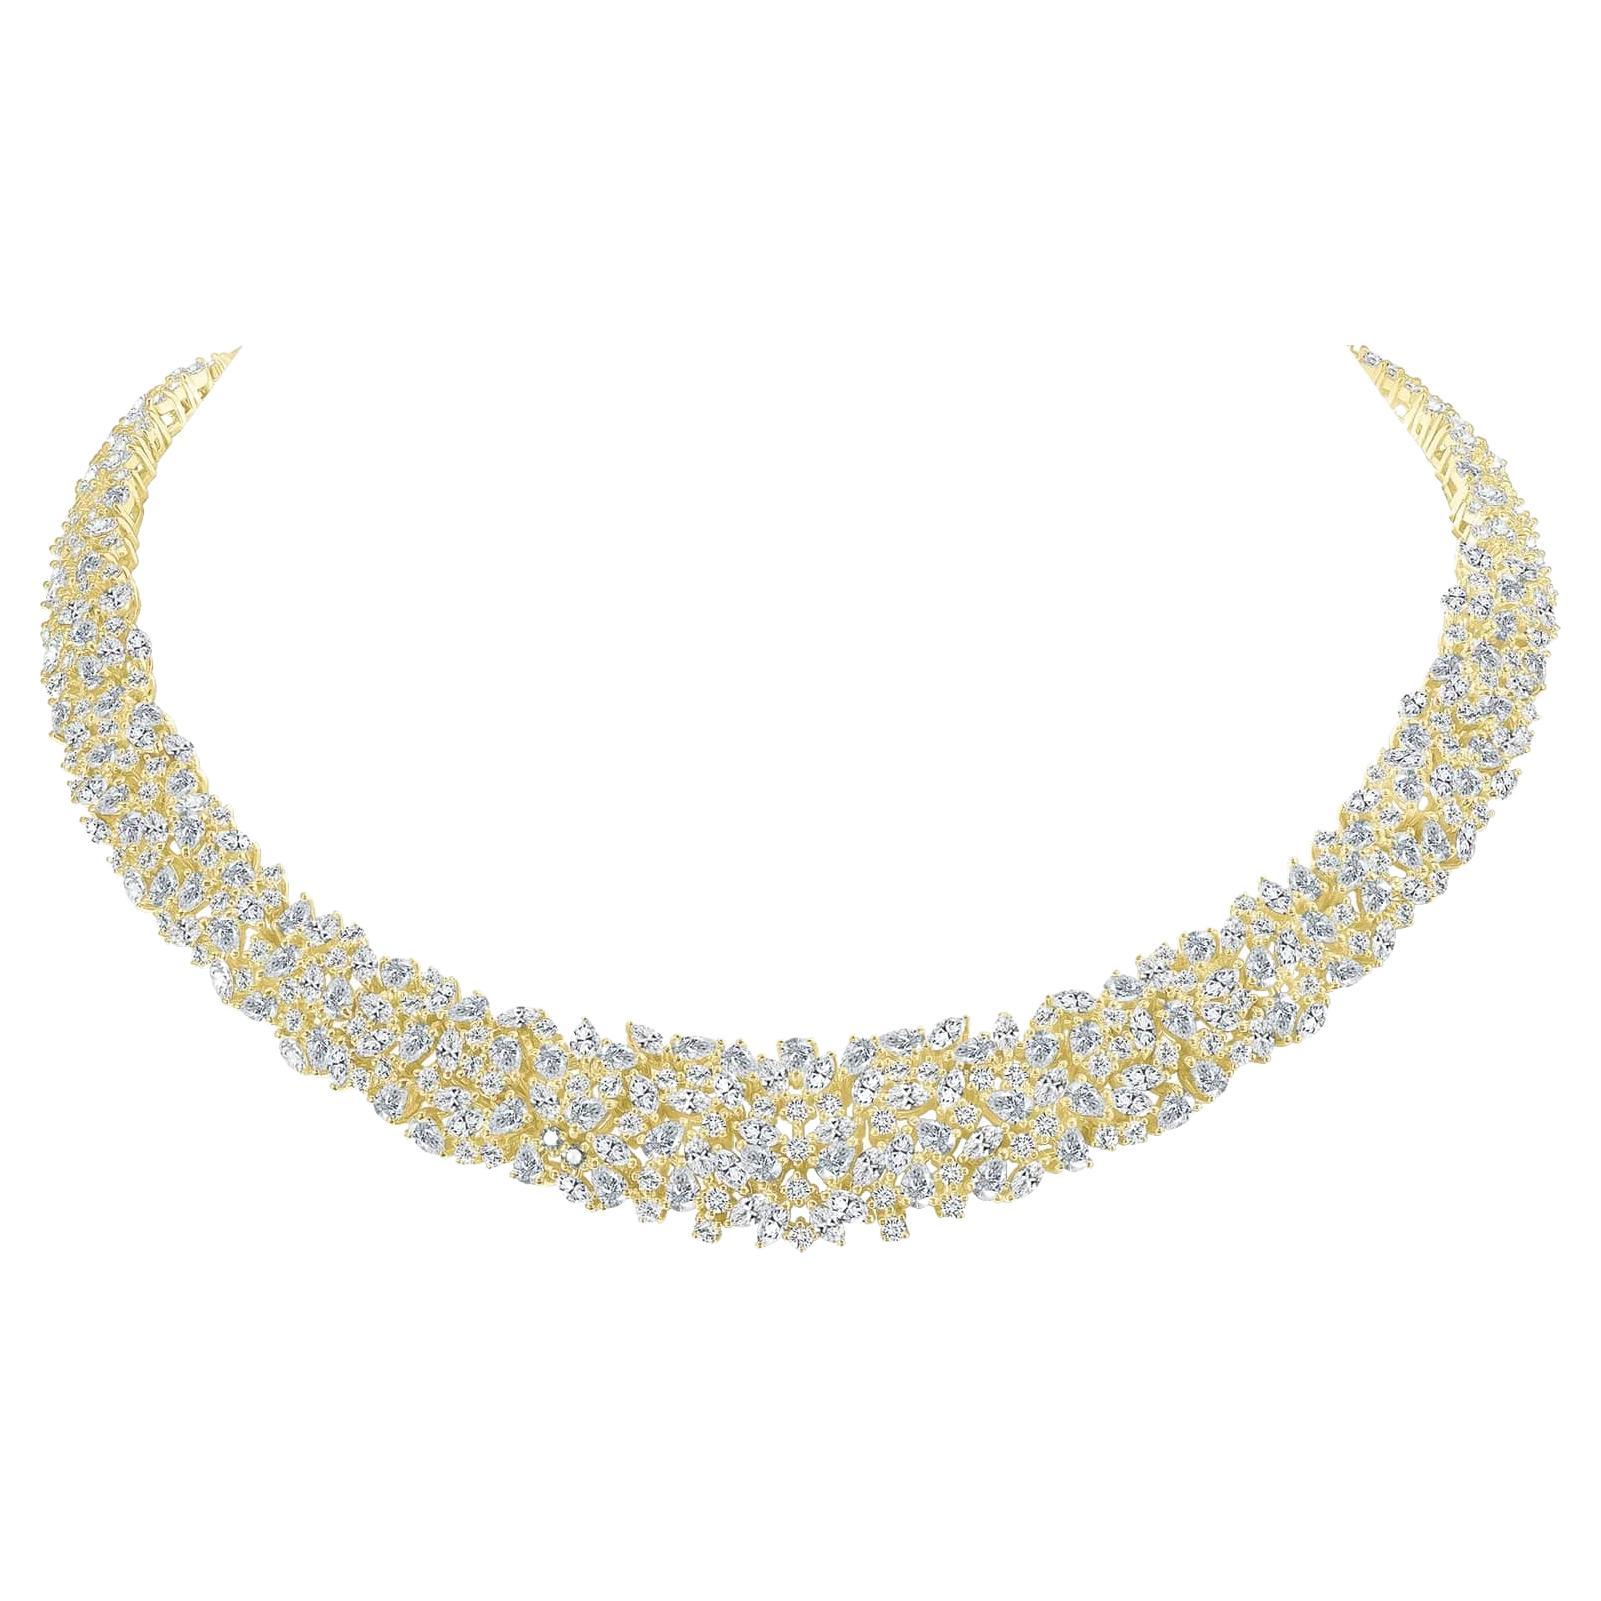 30 Carat Diamond Cluster Necklace For Sale